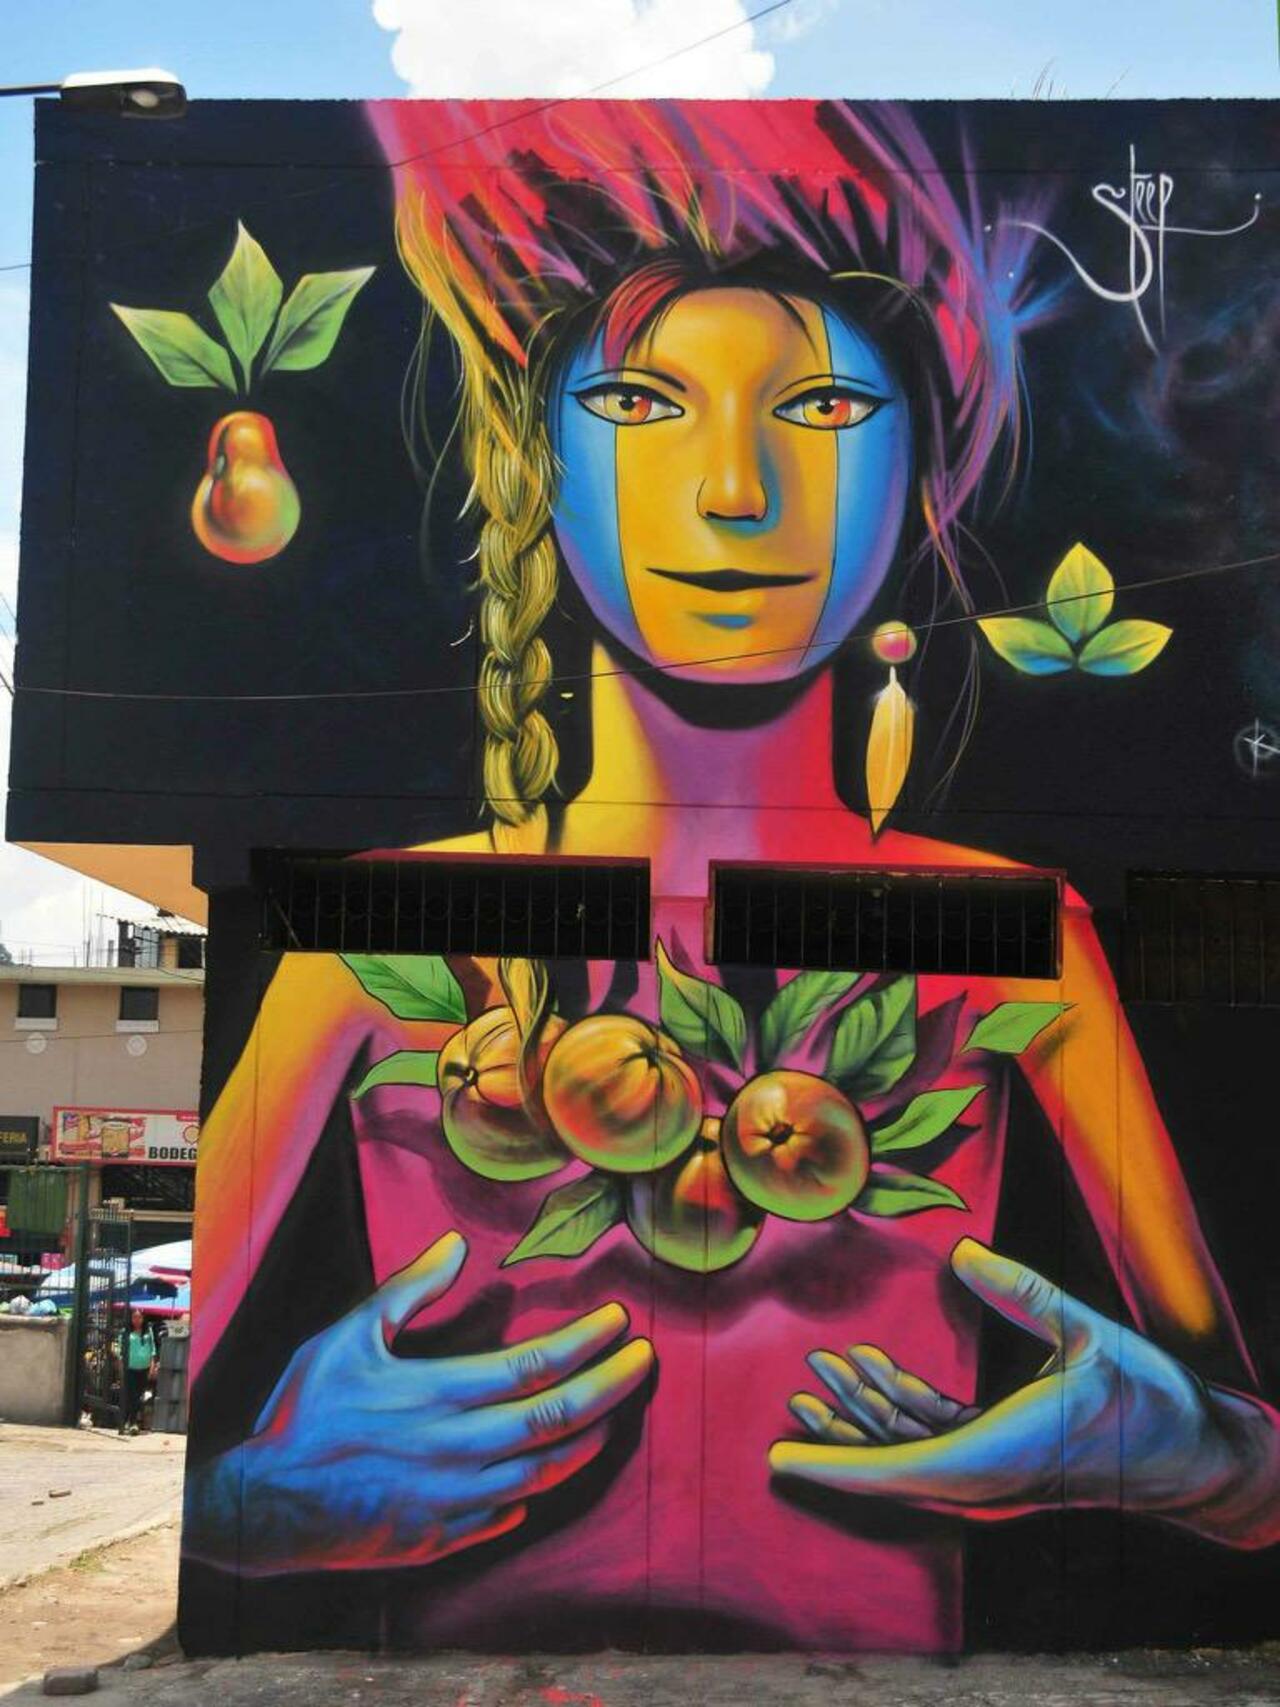 RT @BlossomTweetMe: Nice! Street Art by Steep

#art #graffiti #mural #streetart http://t.co/9pQKcAsjYS MT @GoogleStreetArt